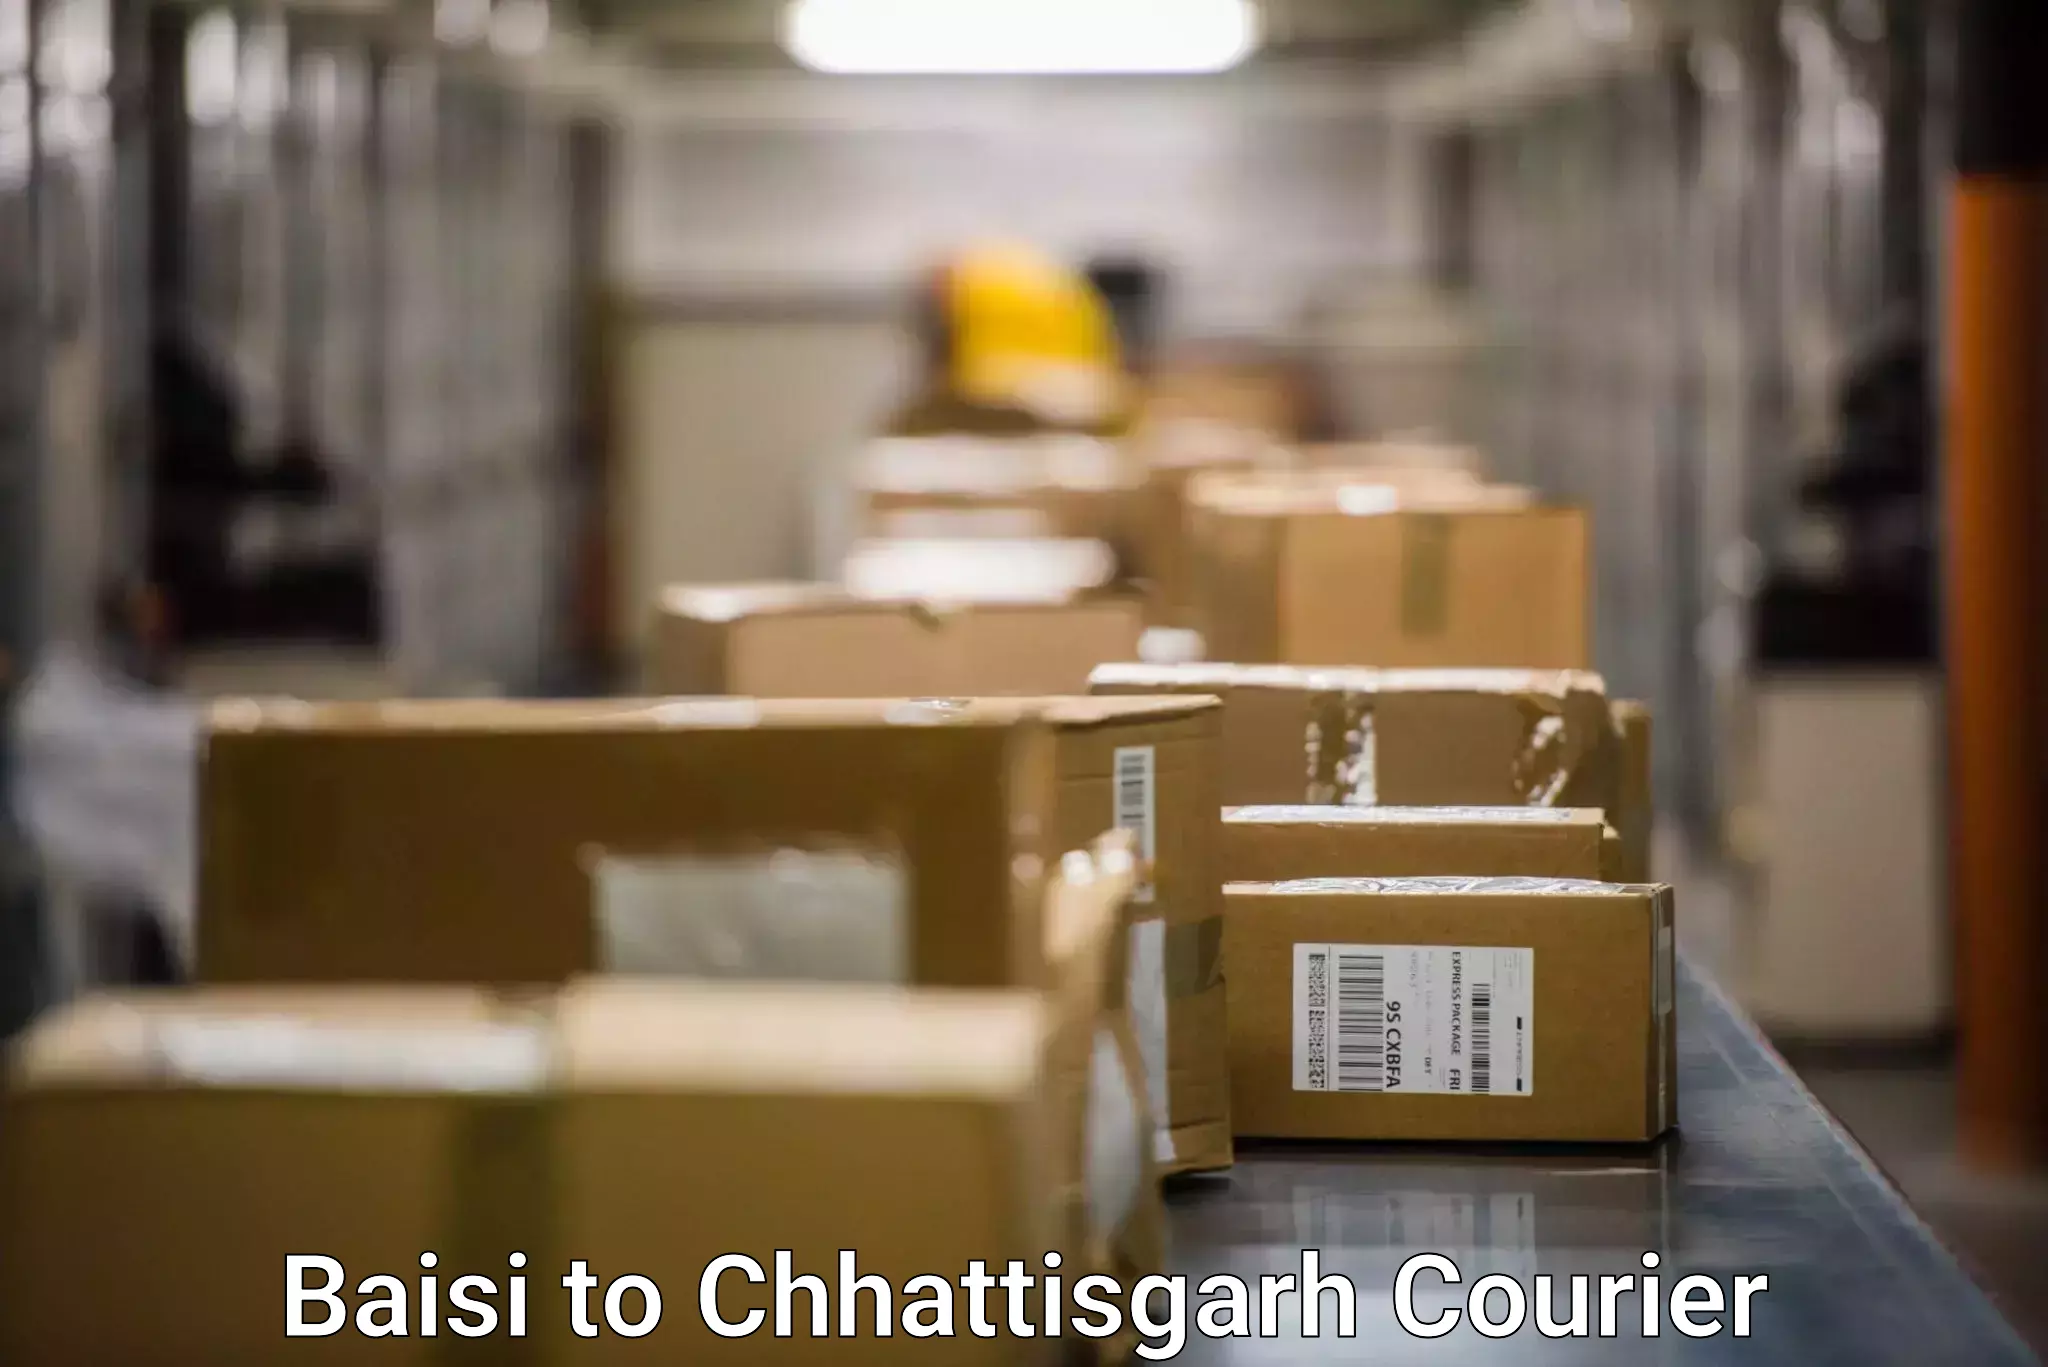 Courier service innovation Baisi to Chhattisgarh